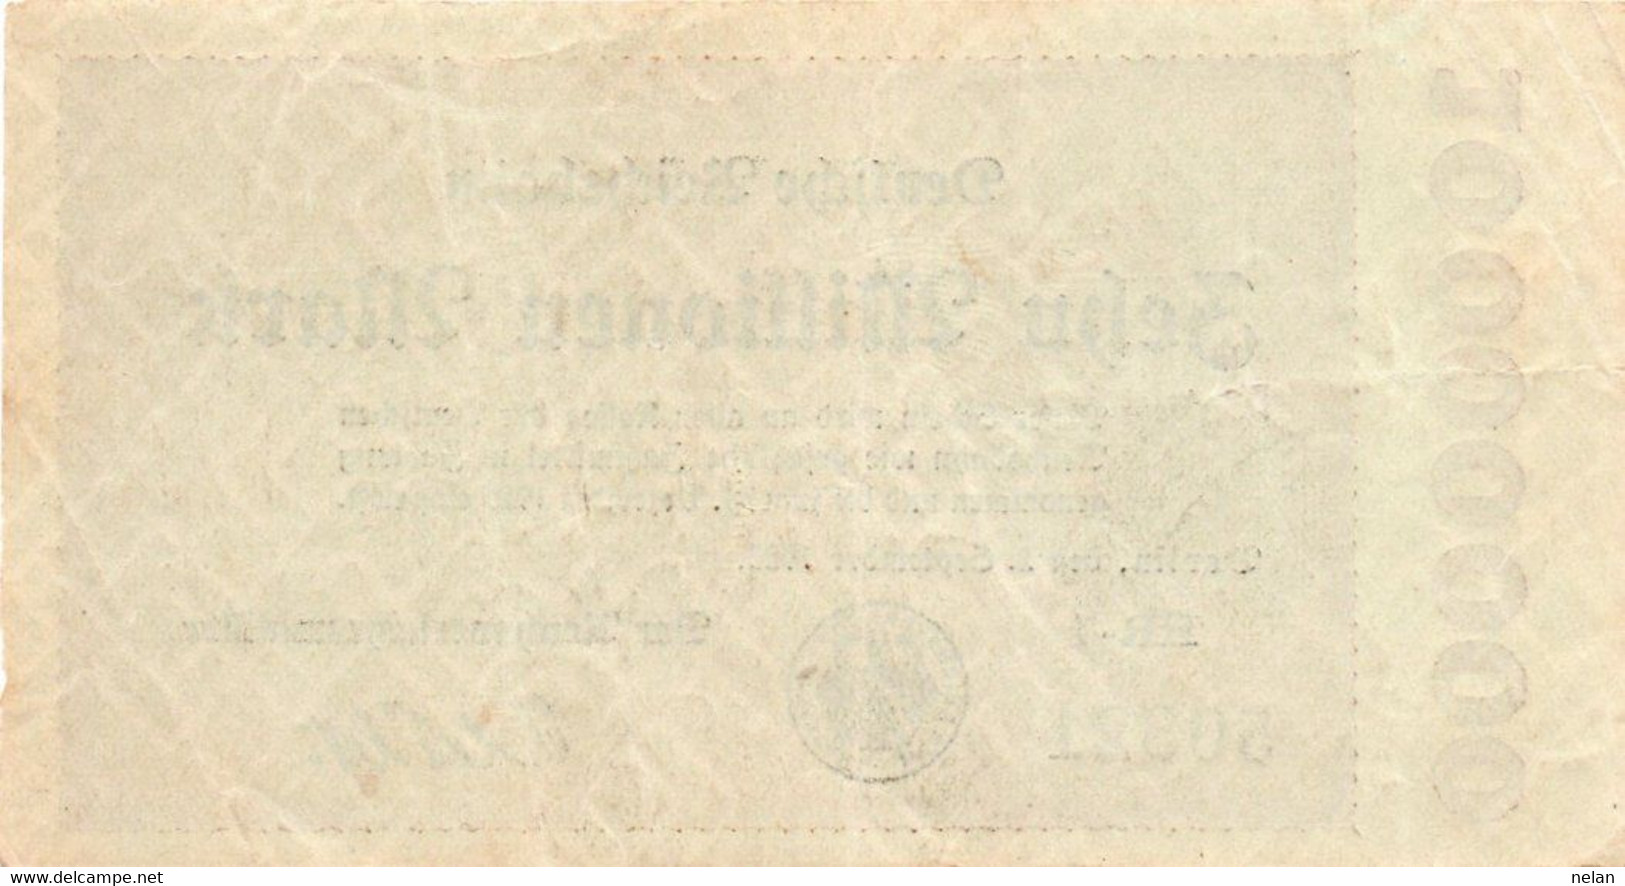 GERMANY-10 MILLIONEN MARK 1923 - Wor:P-S1014.2, Kel:340i.2, MüG:002.09b XF (SERIE SPECIALE) UNIFACE - 10 Mio. Mark